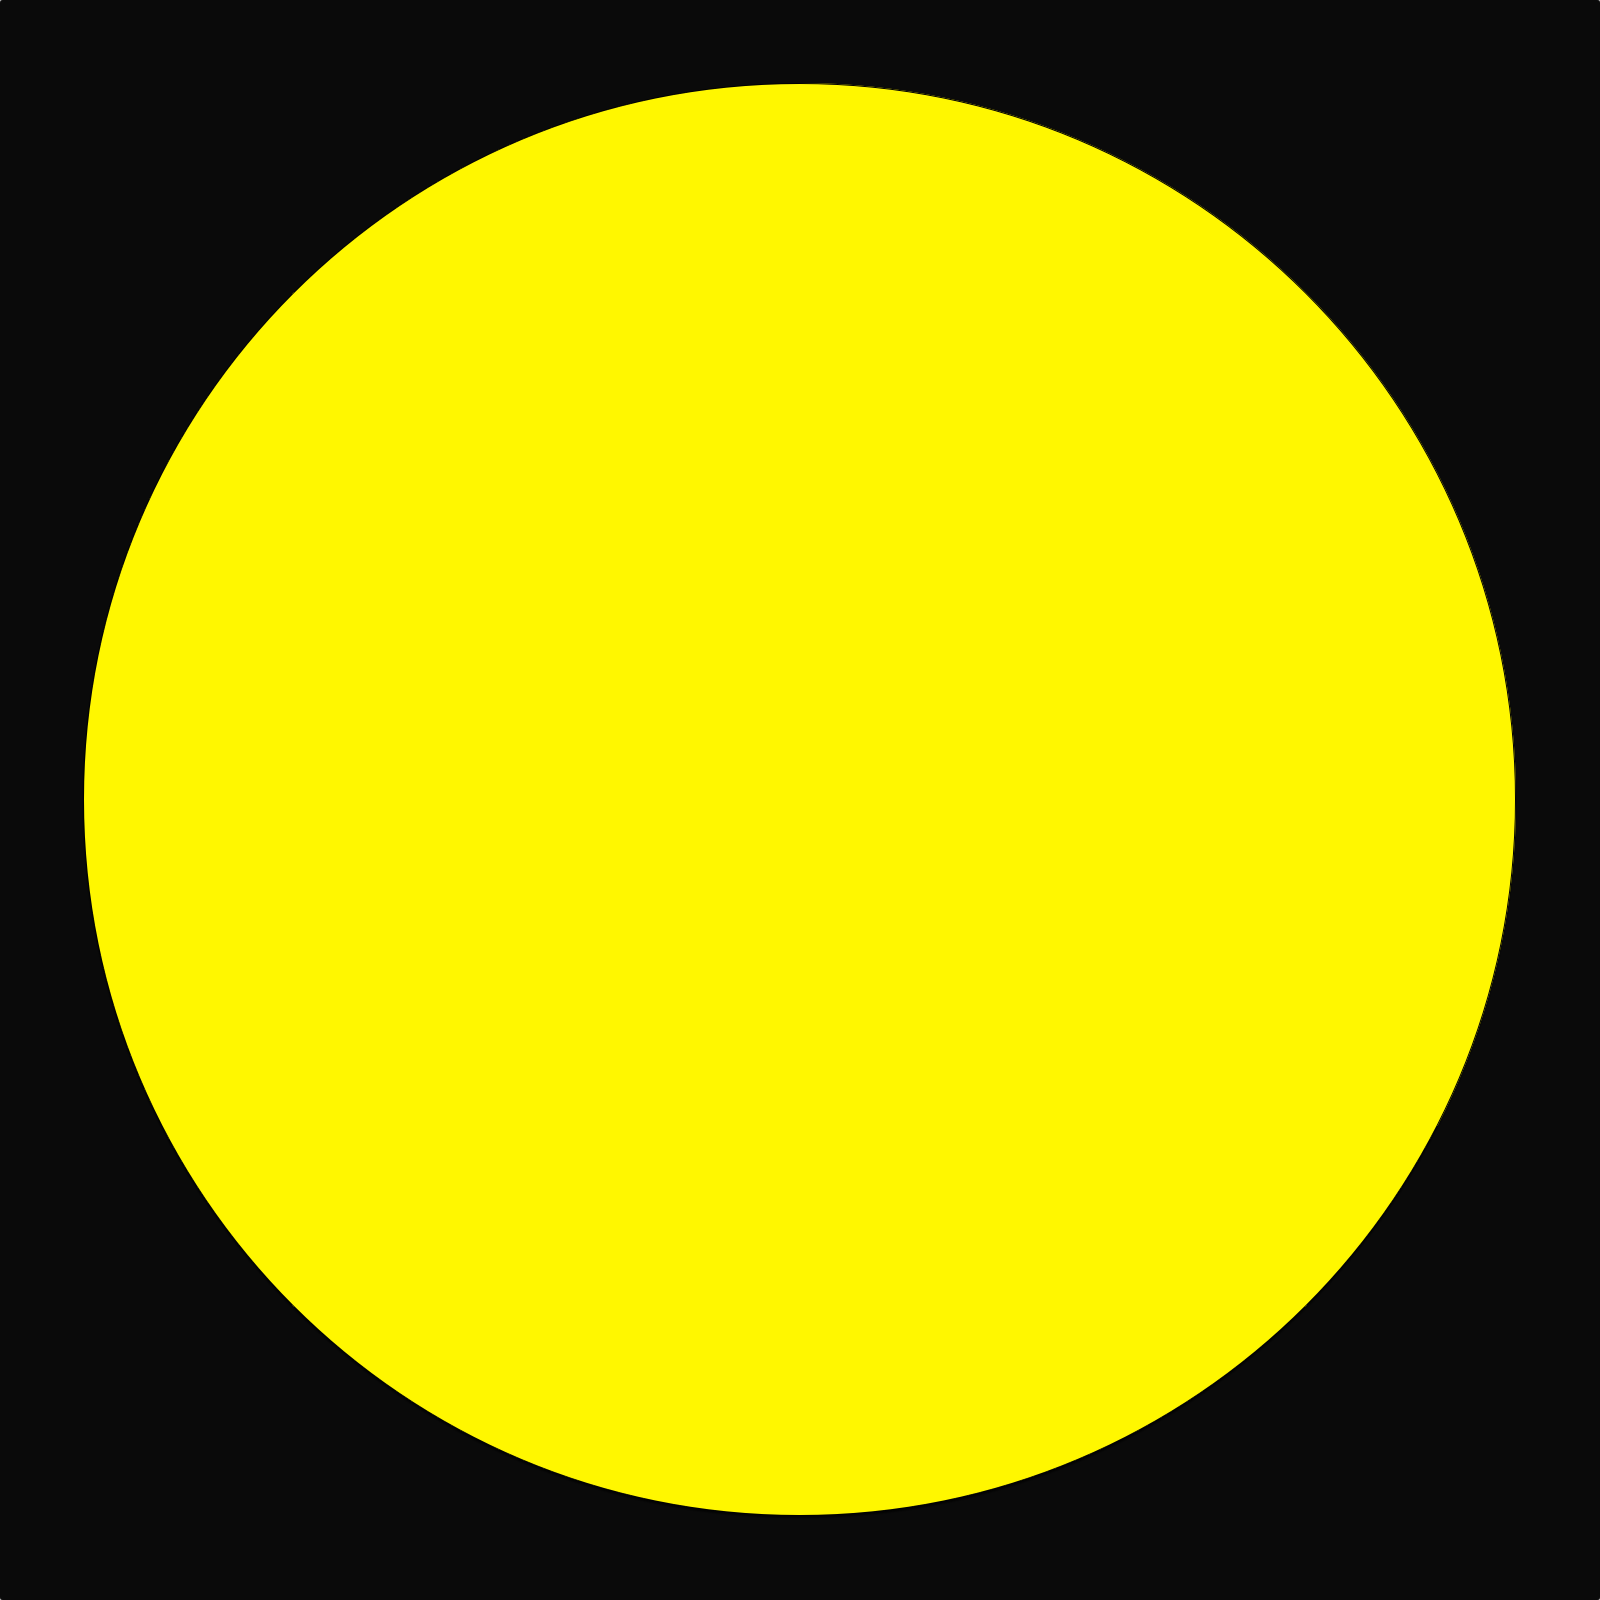 Желтый круг. Желтые кружочки. Желтый кружок. Круг желтого цвета. Желтый круг для слабовидящих